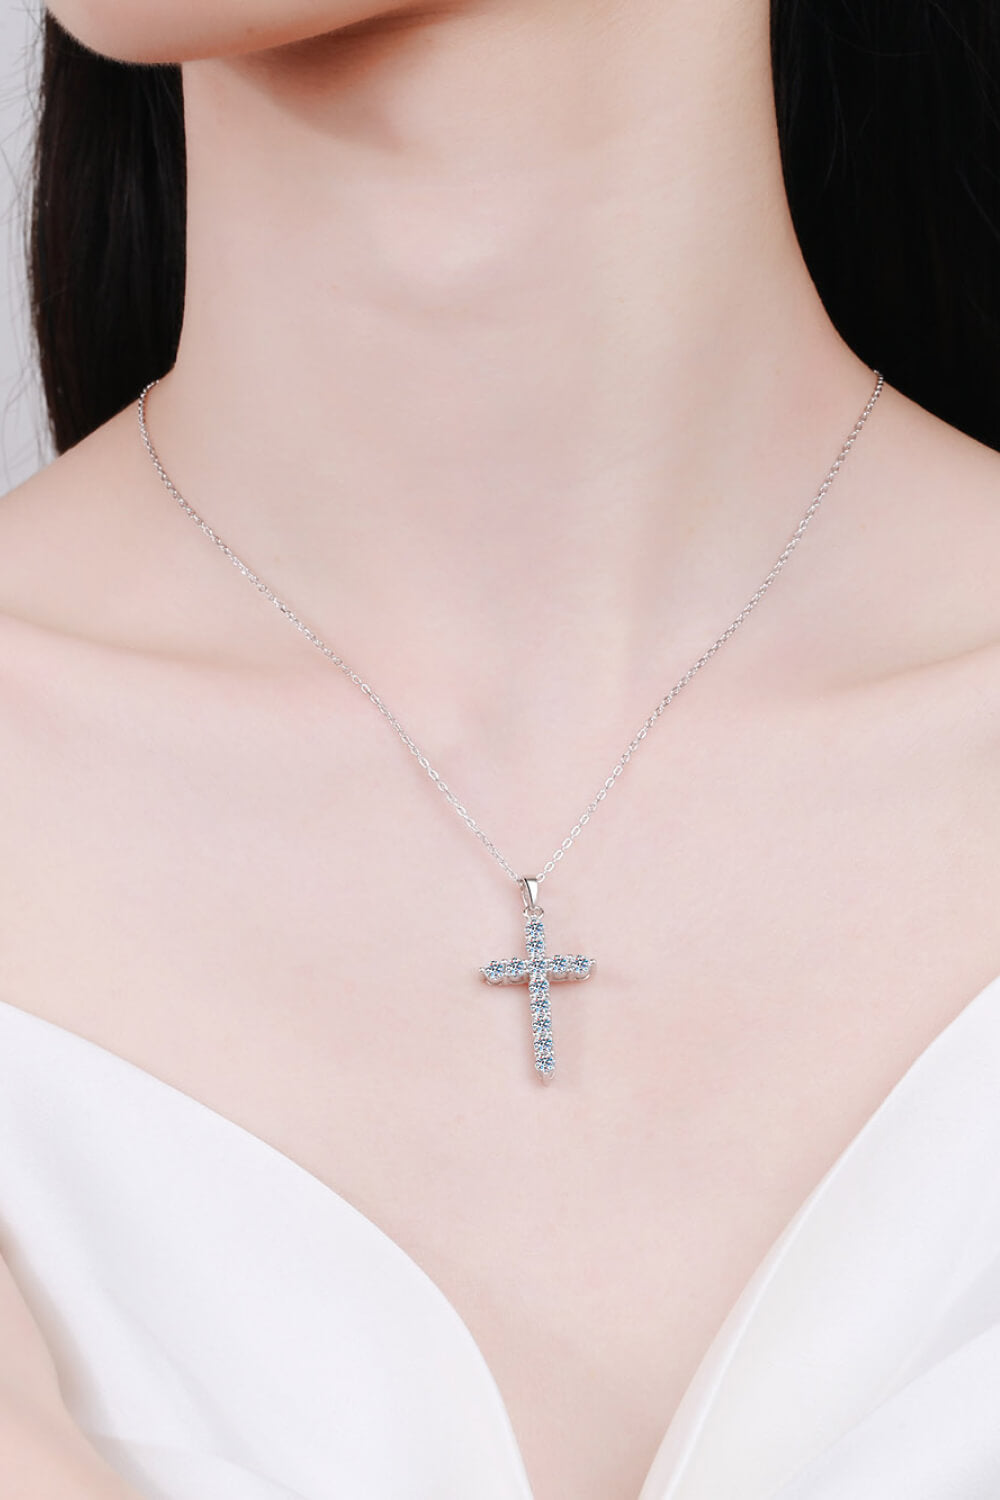 925 Sterling Silver Cross Moissanite Necklace - Sharon David's